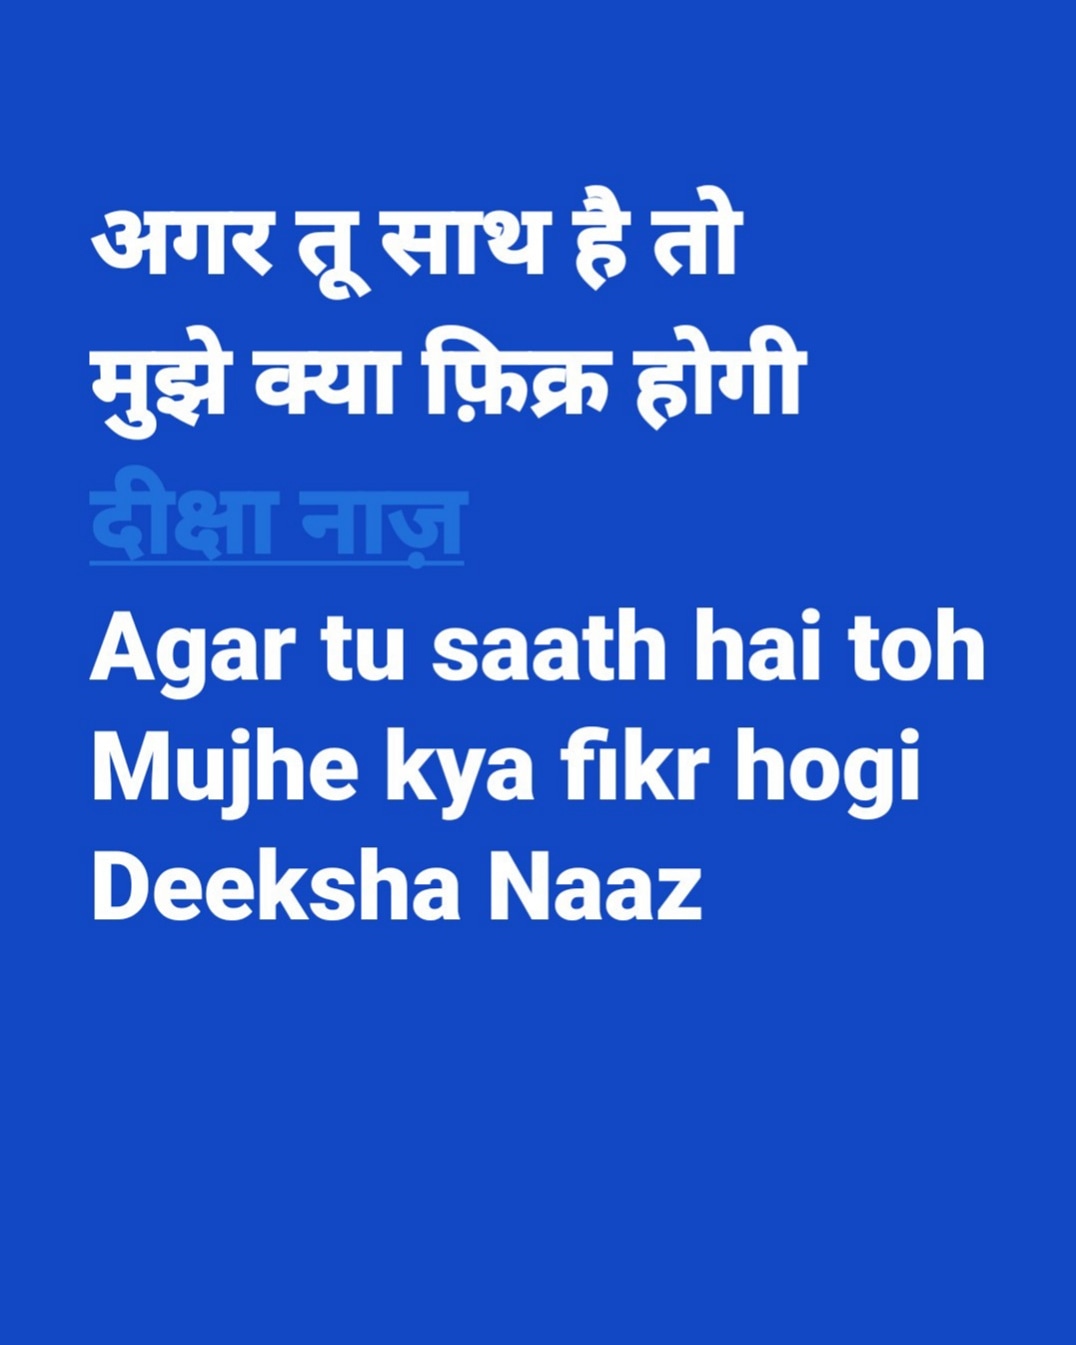 Deeksha Naaz